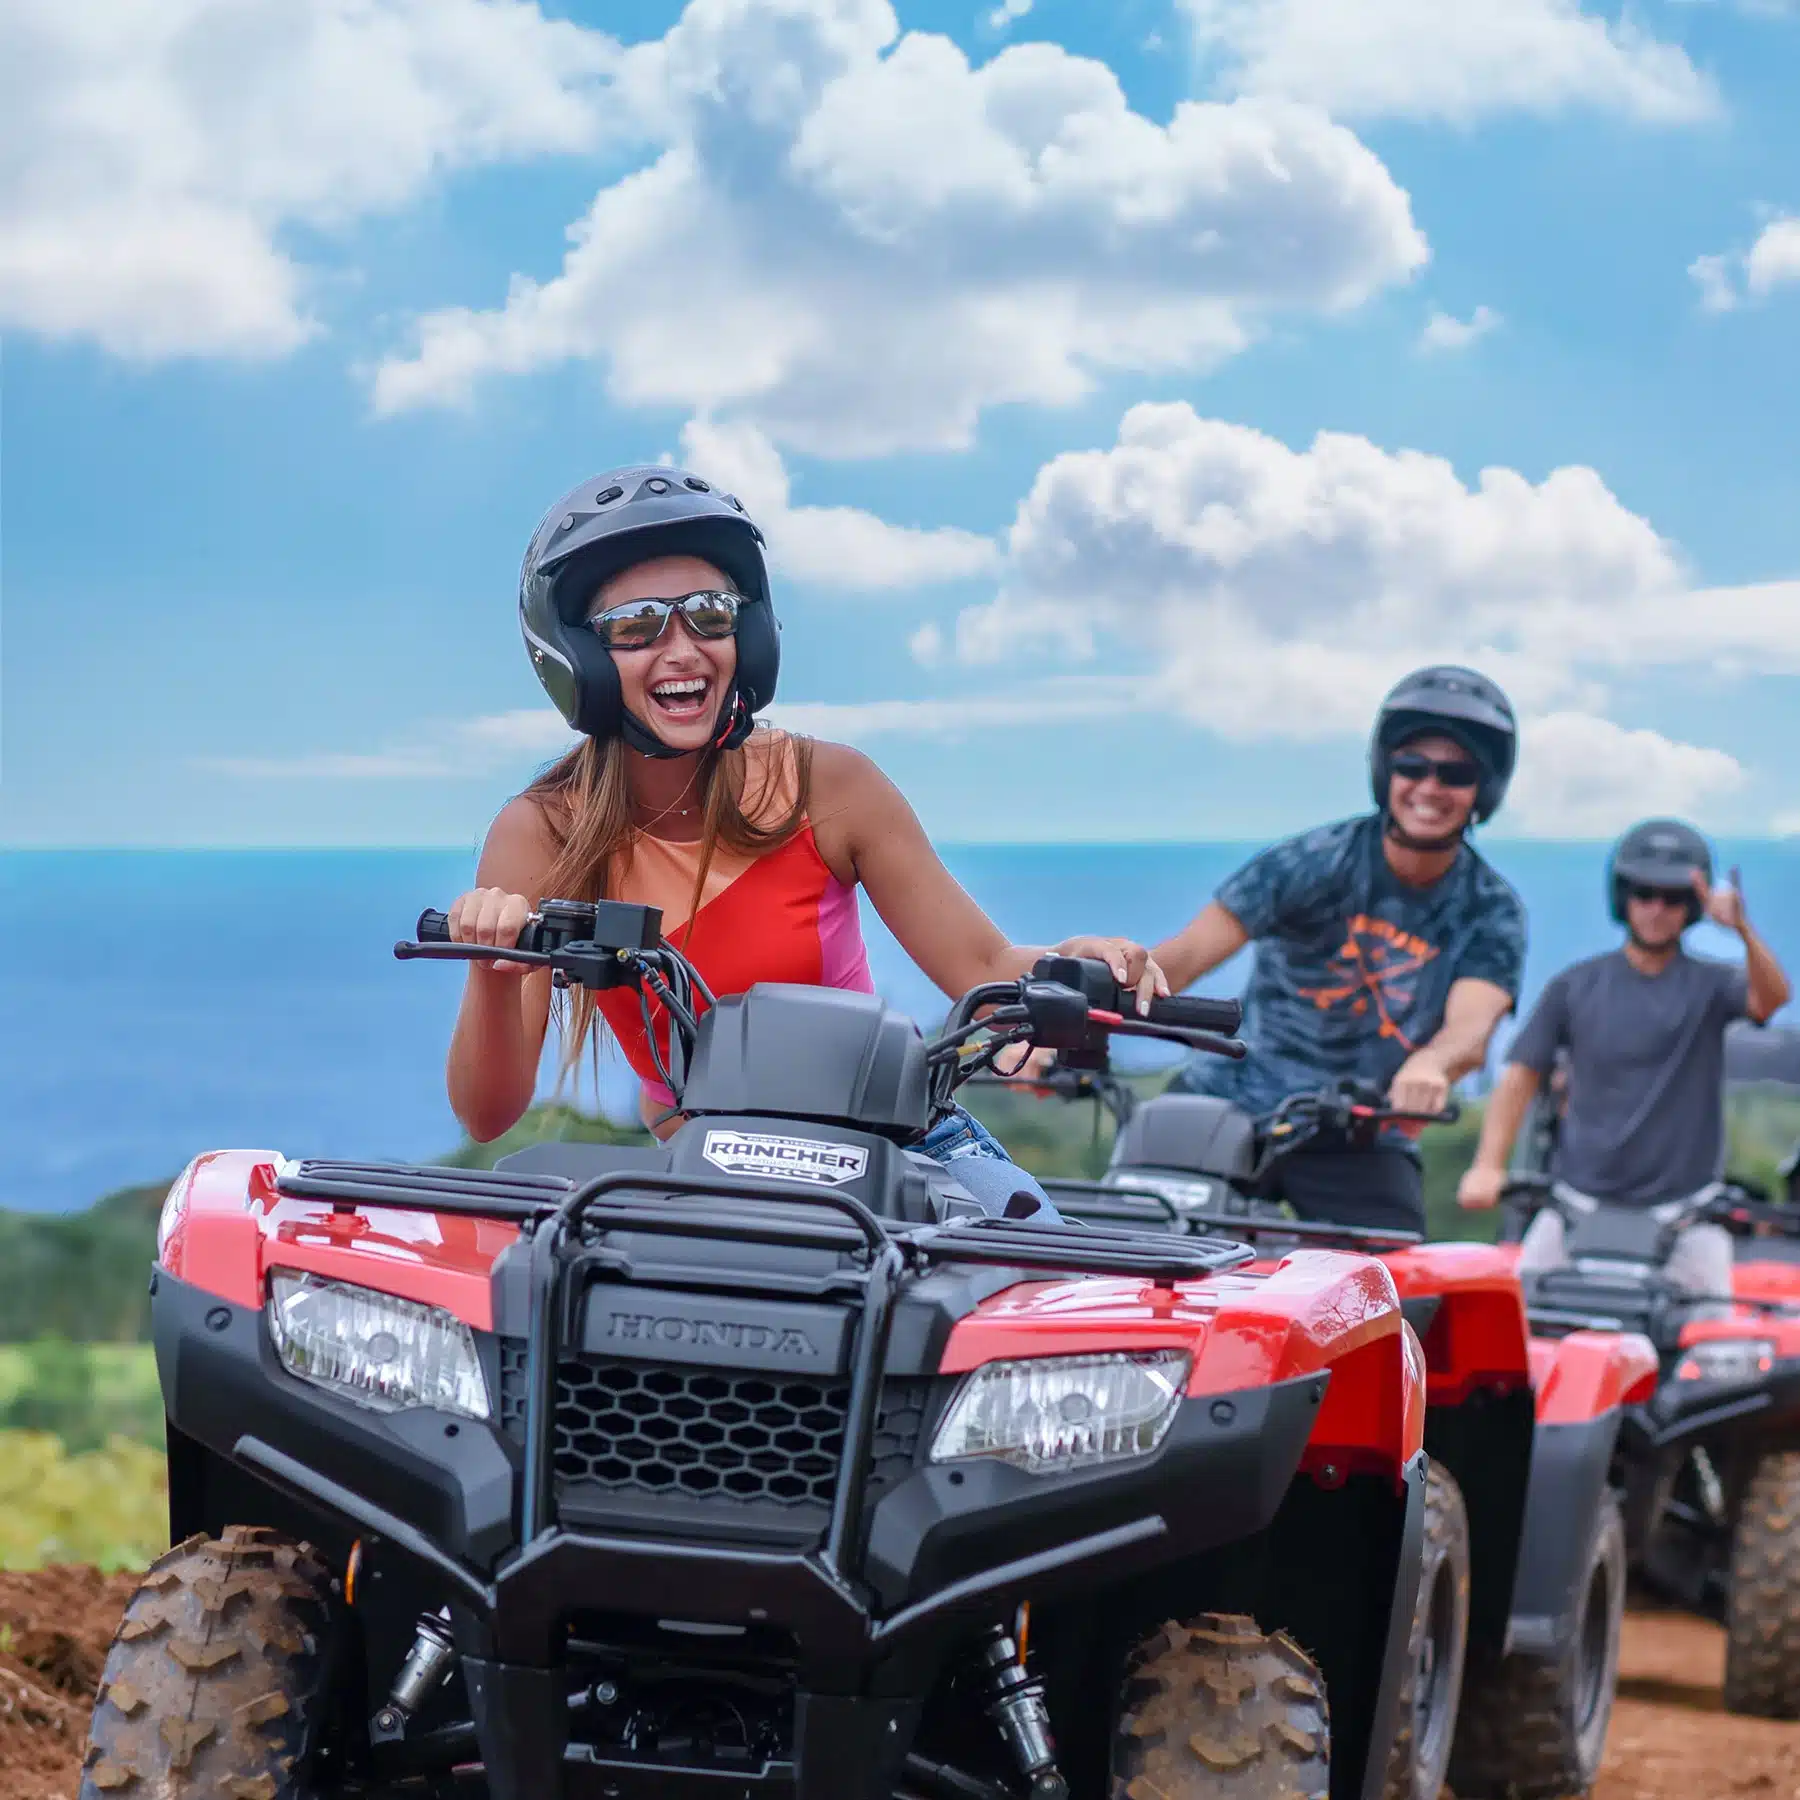 Umauma's Deluxe ATV Experience is a Land Activity located in the city of Hakalau on Big Island, Hawaii